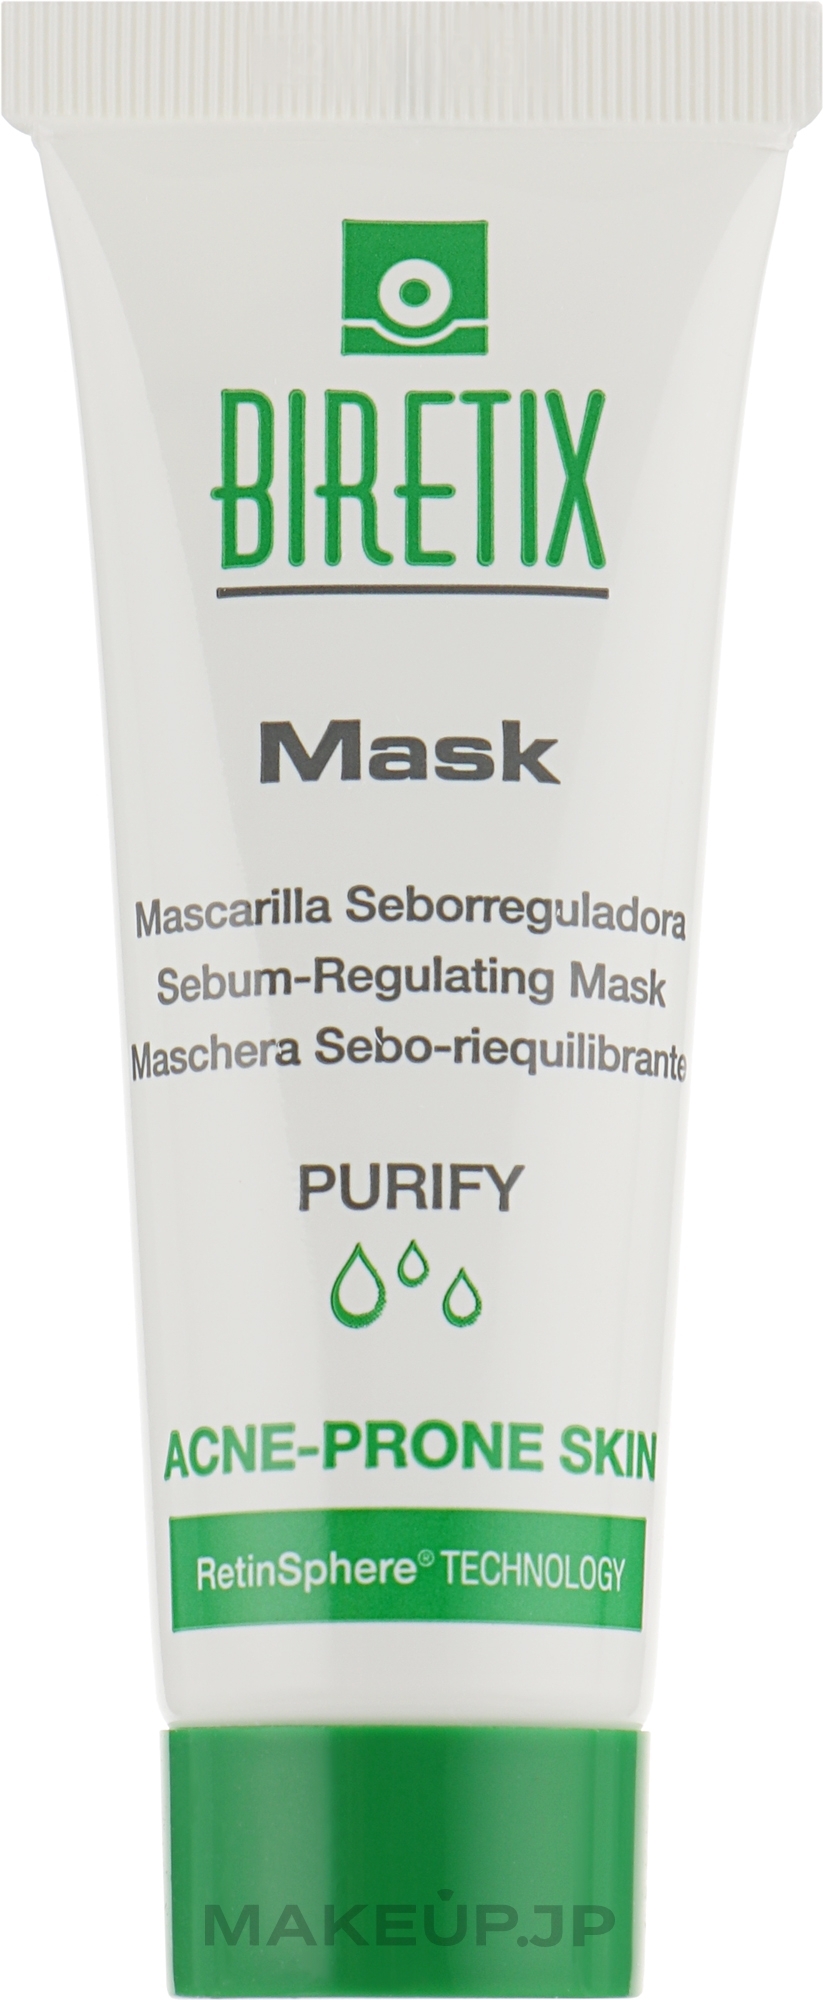 Sebo-Regulating Facial Mask for Acne-Prone Skin - Cantabria Labs Biretix Mask — photo 25 ml